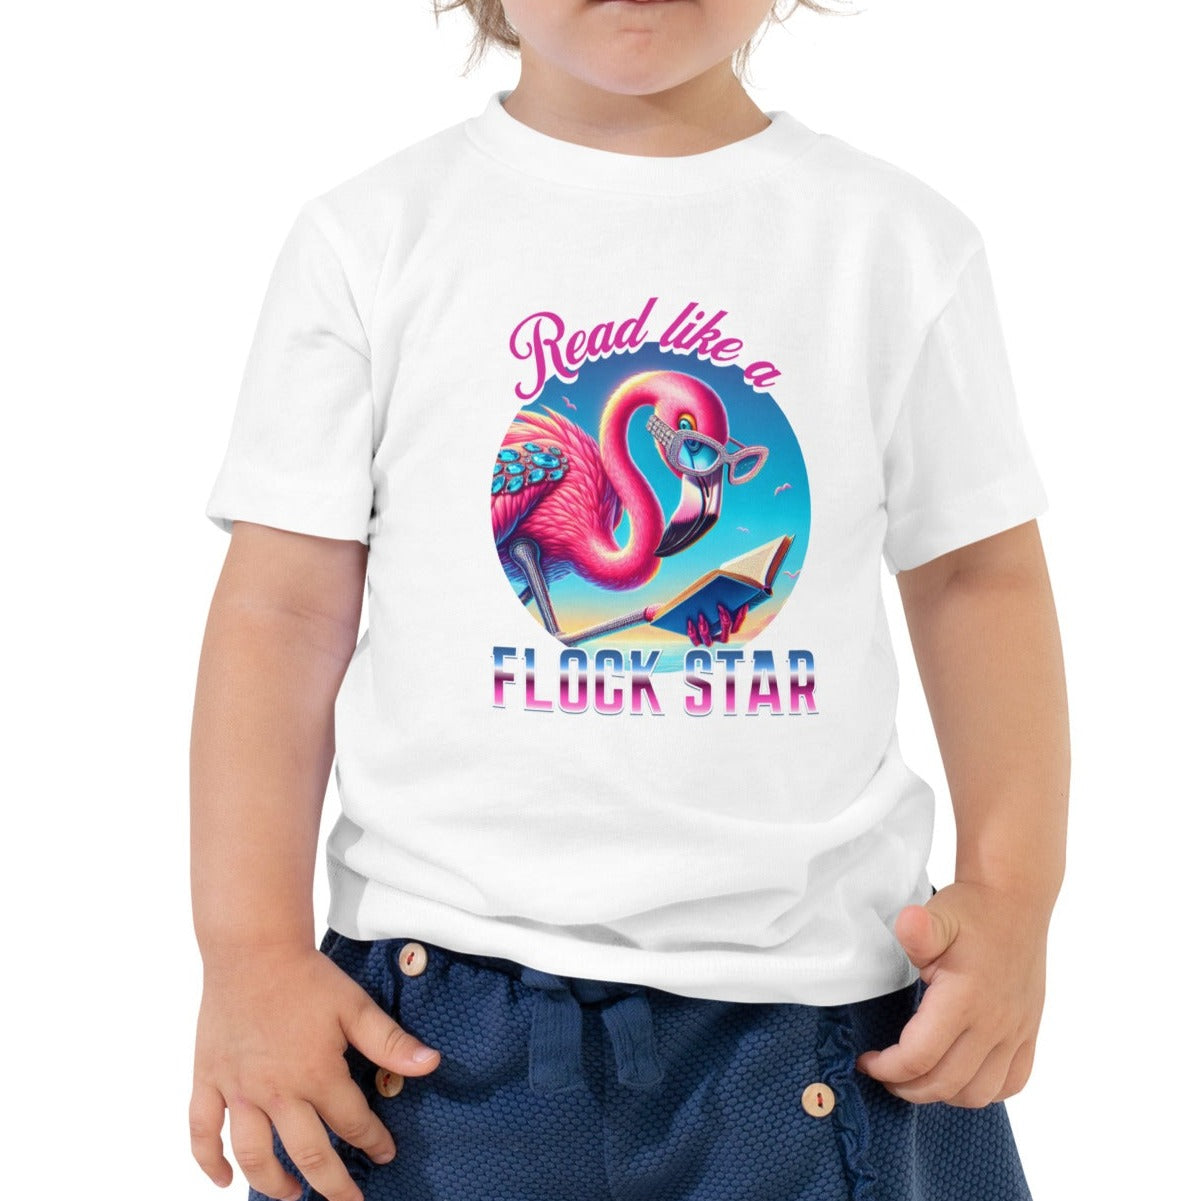 TODDLER "Read Like a Flock Star" Flamingo Toddler Short Sleeve Summer Reading T-Shirt Tee Tshirt